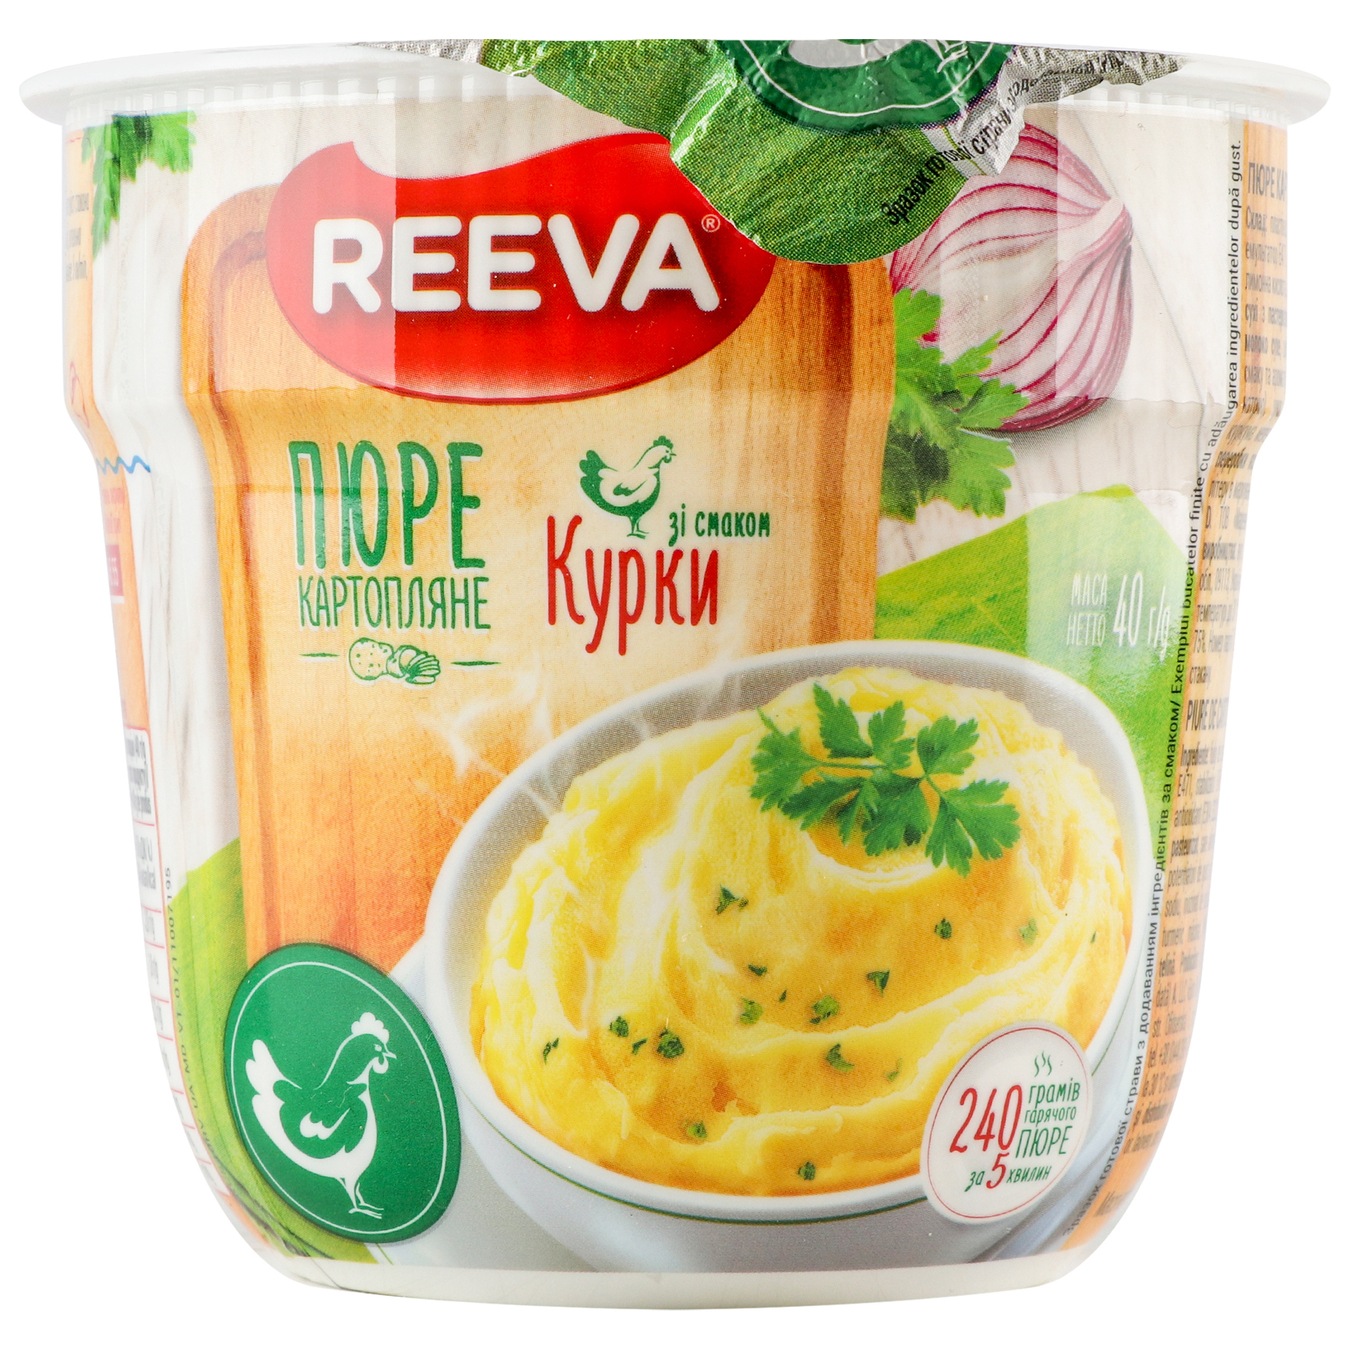 Reeva potato puree with chicken flavor 40g 2